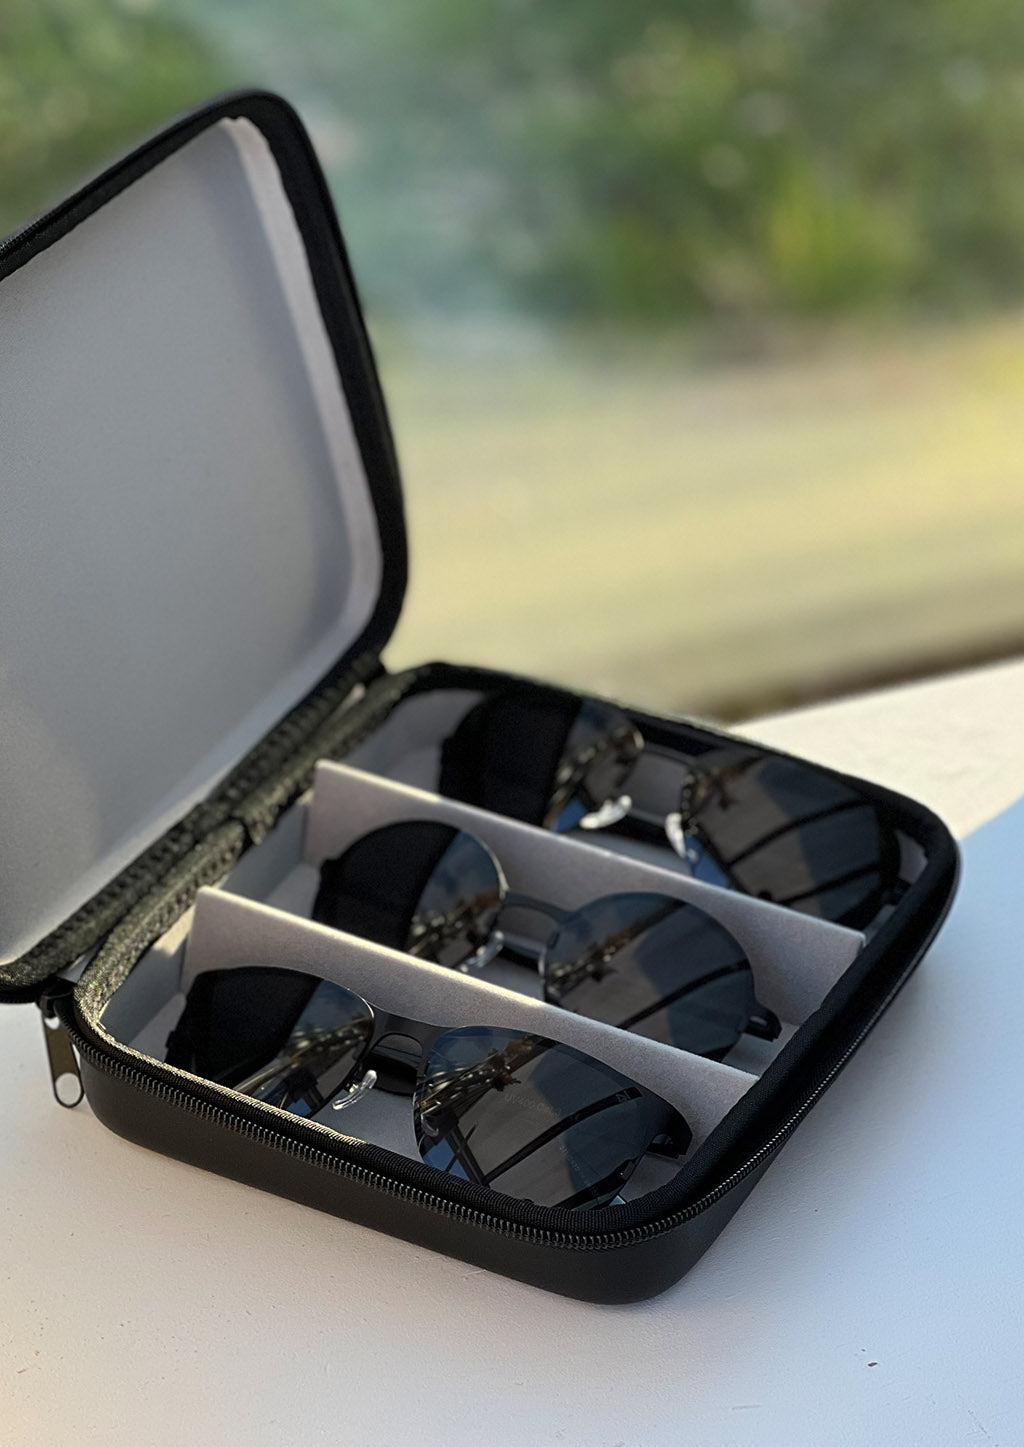 Vegan sunglasses travel case with room for 3 pair of sunglasses.